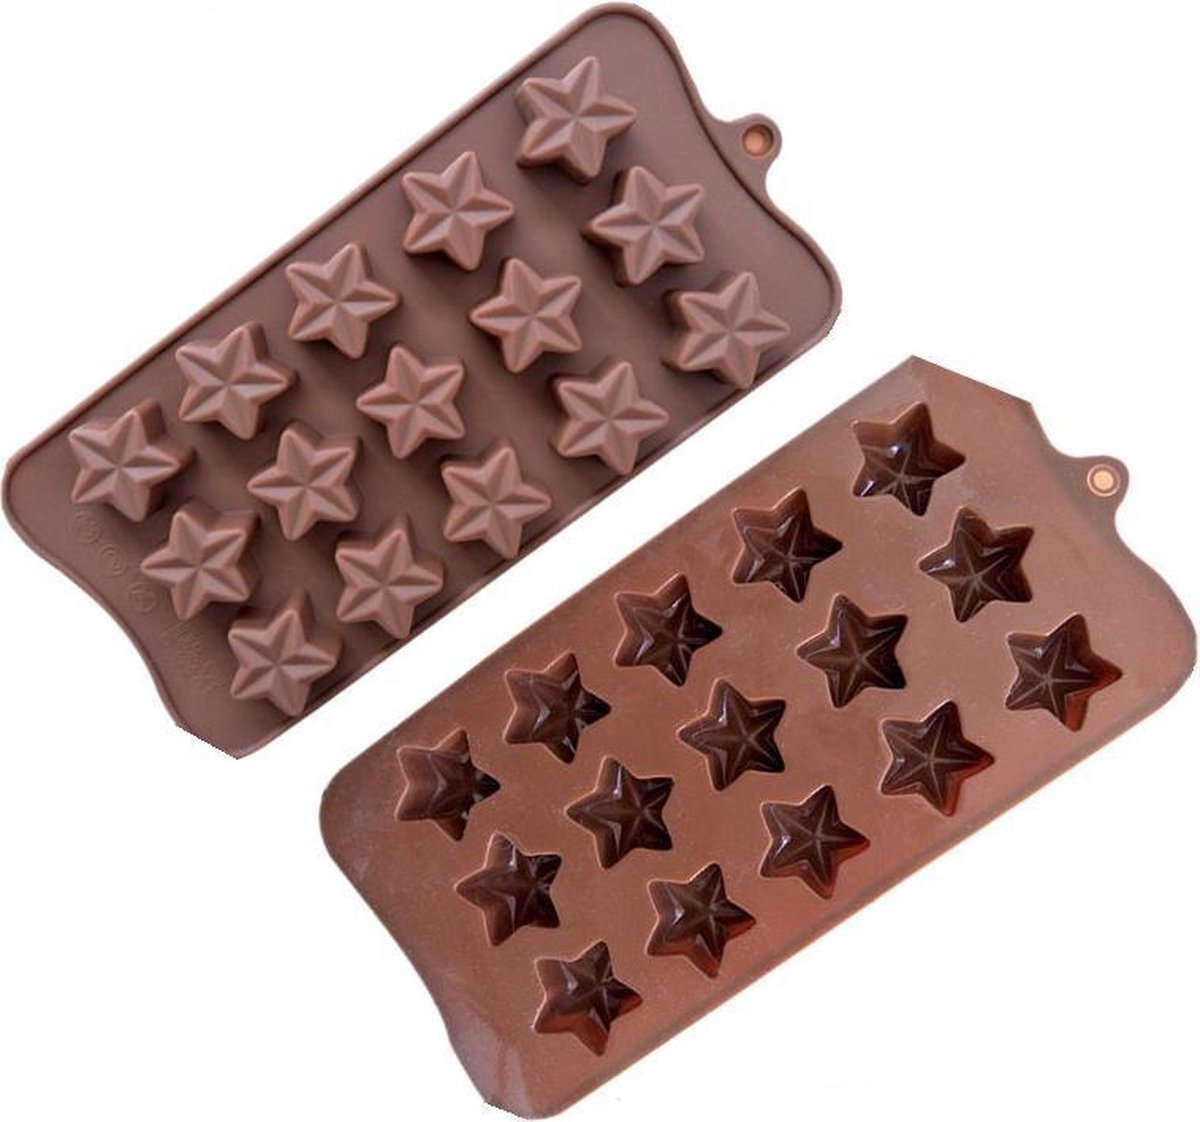 ProductGoods - Siliconen bakvorm - Bonbonvorm - Chocoladevorm - Sterren - 15 stuks - Bakvormen